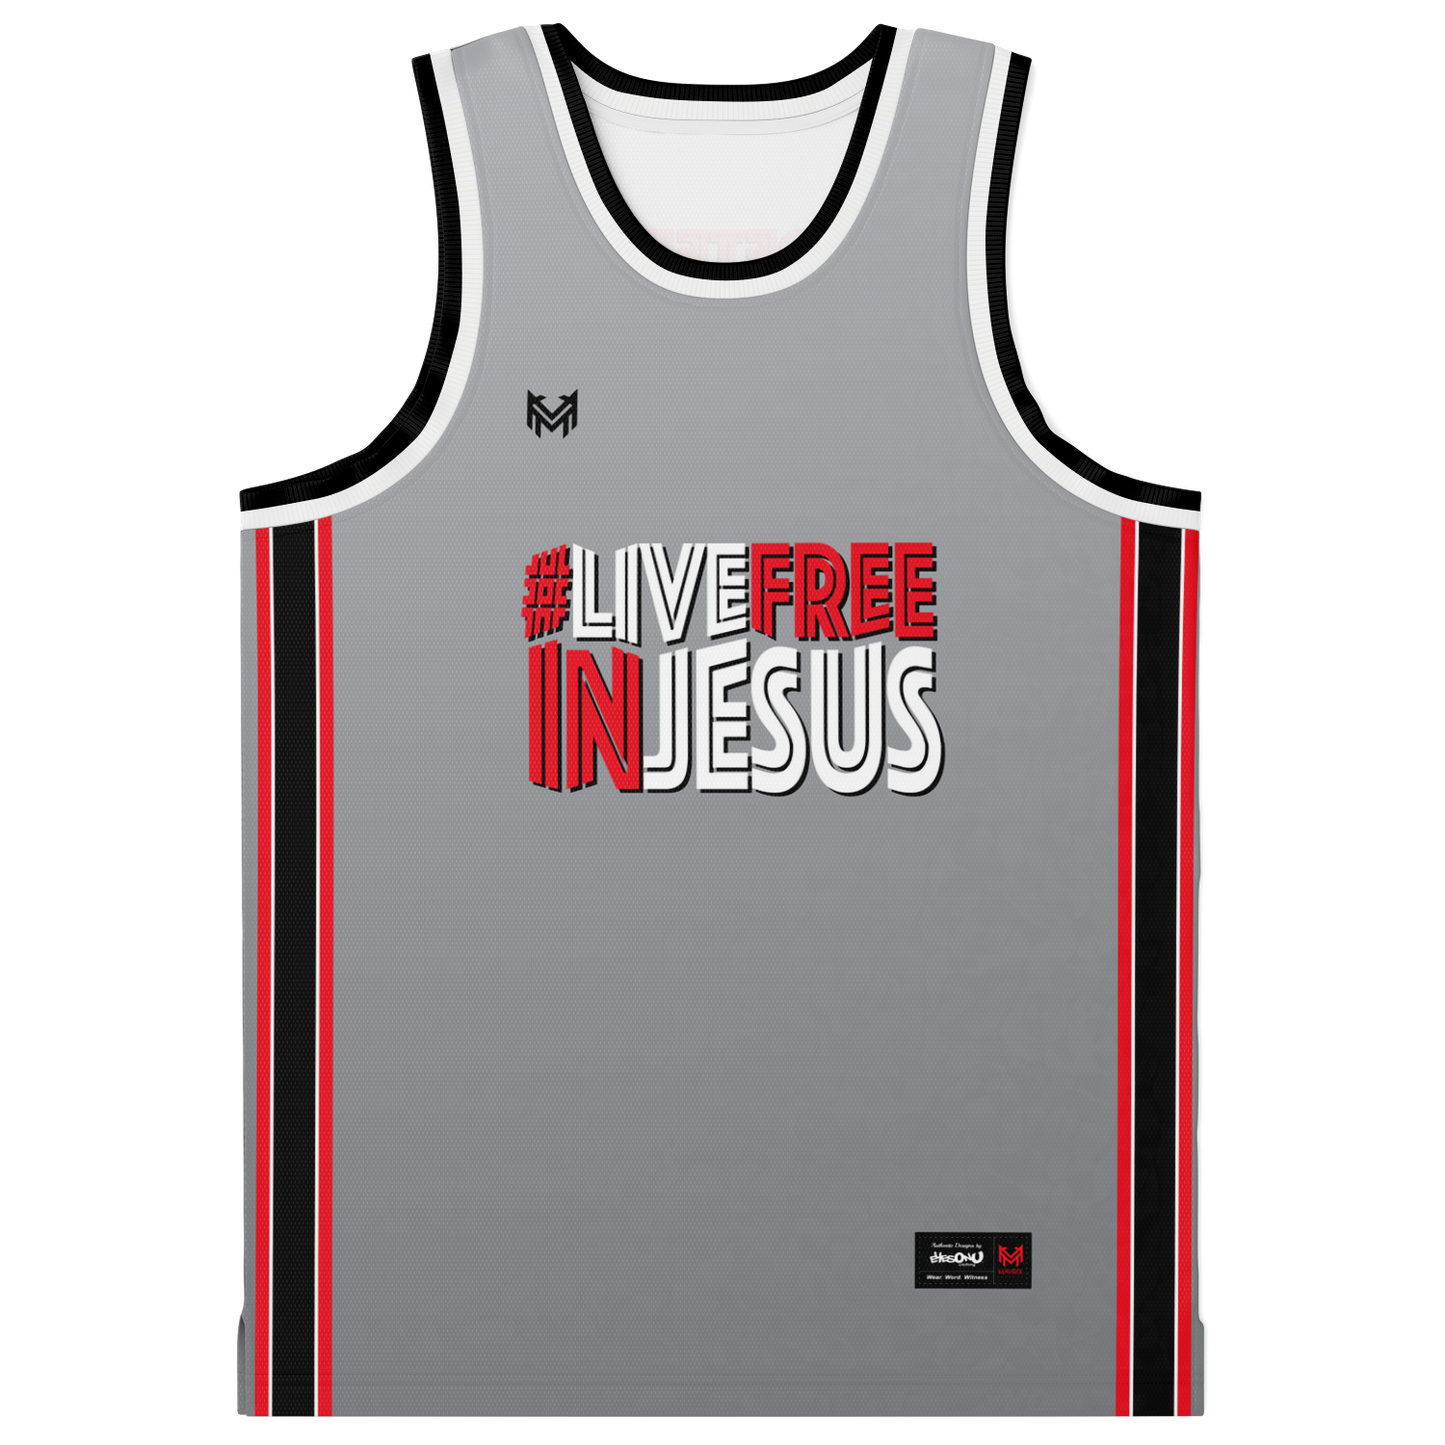 Mavrix LiveFreeInJesus - Basketball Jersey